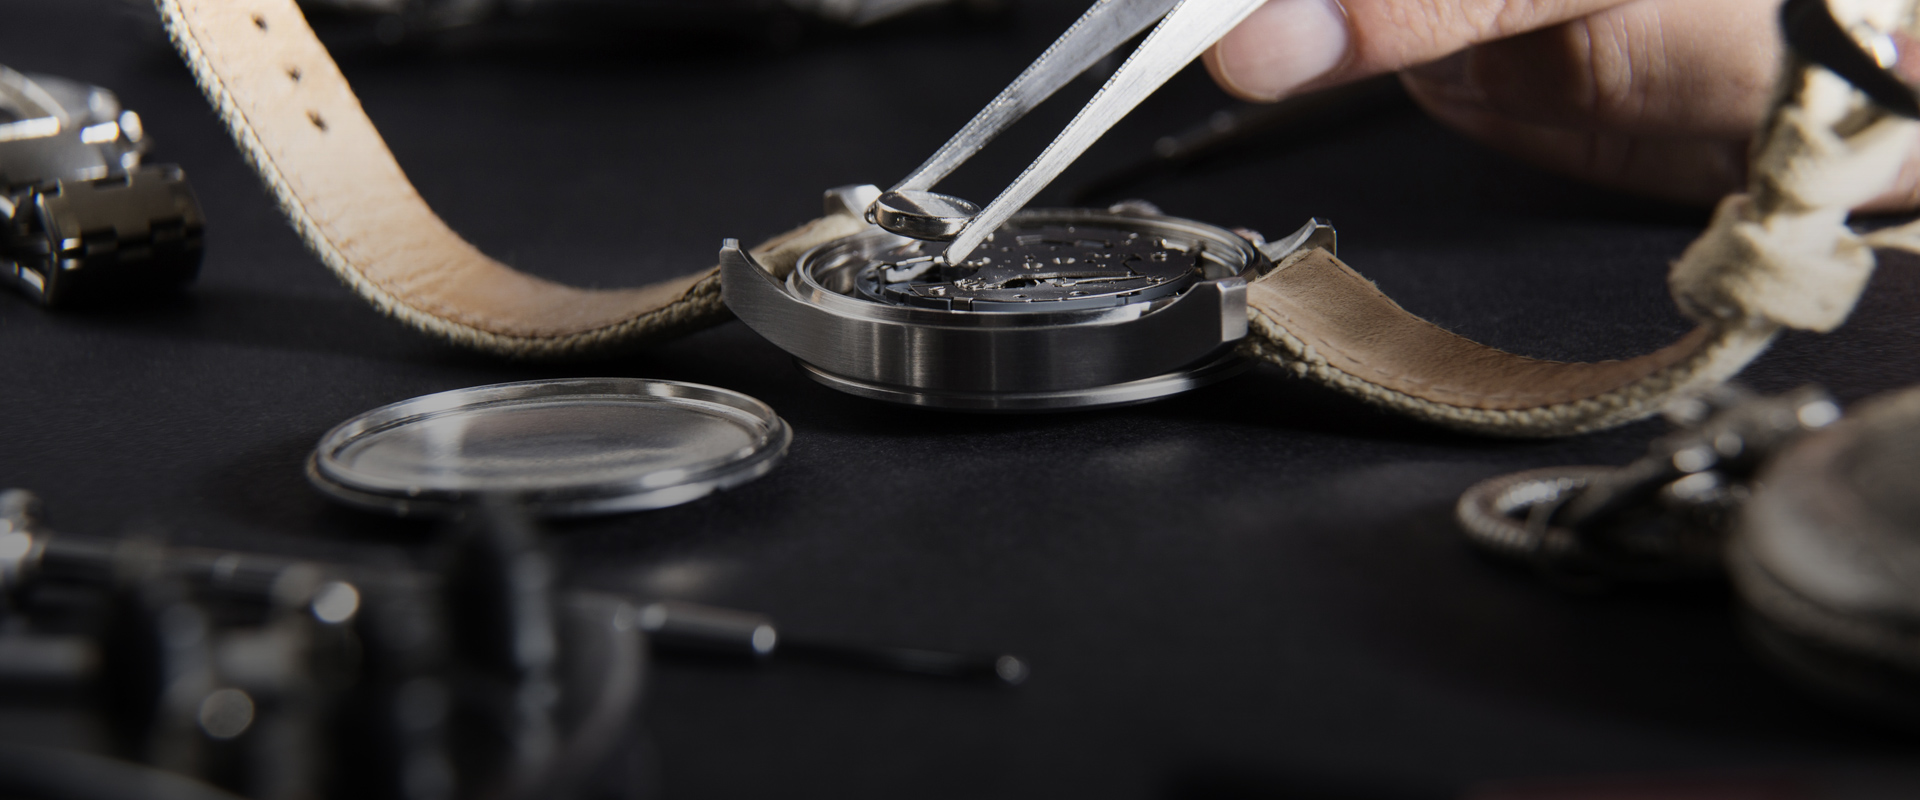 l'orologiaio vendita orologi taranto